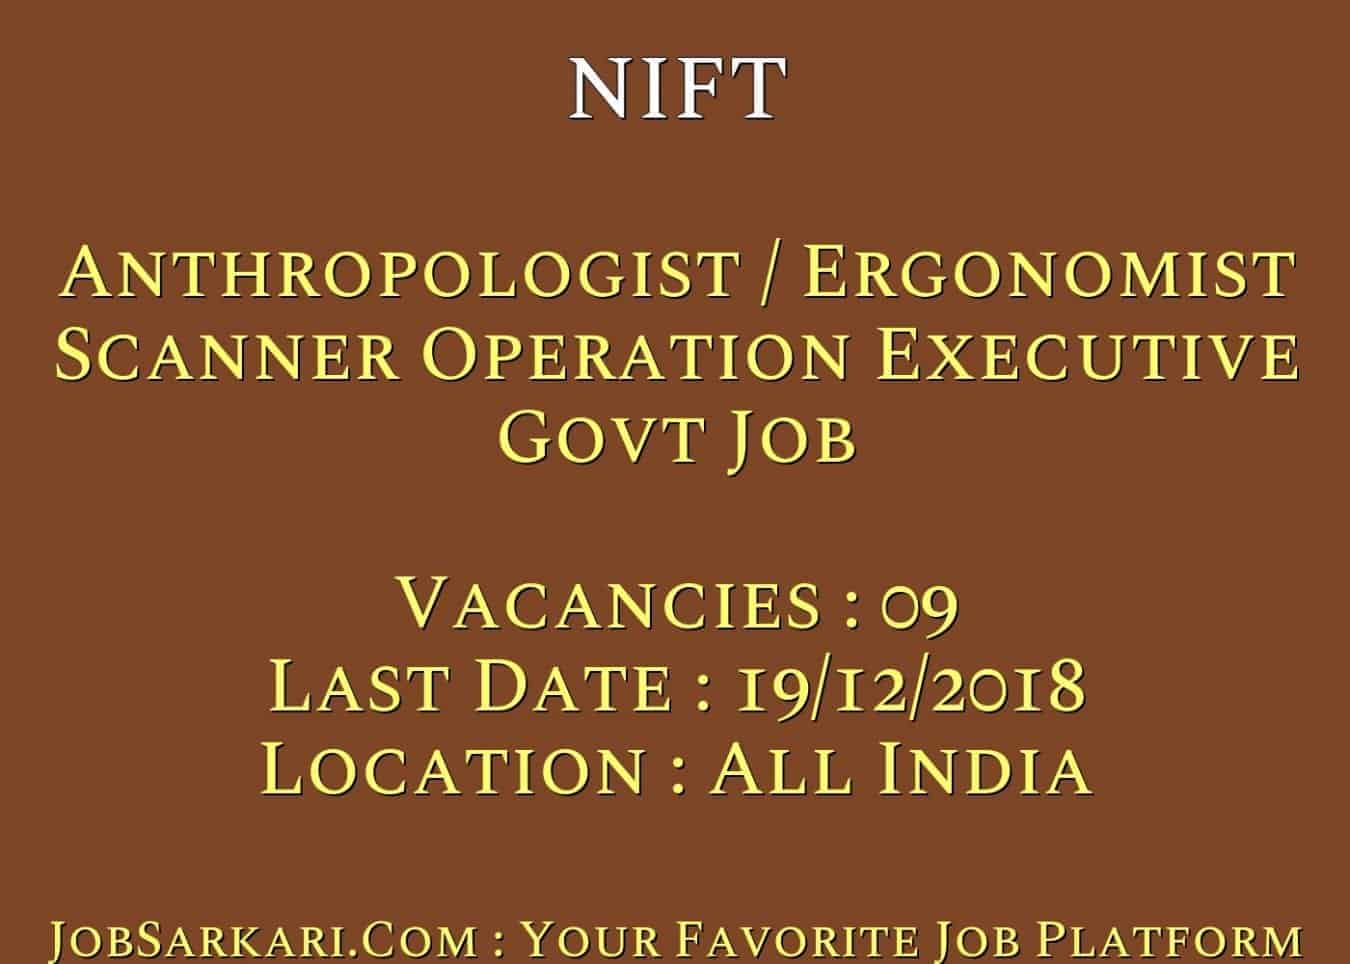 NIFT Recruitment Anthropologist / Ergonomist and Scanner Operation Executive Govt Job